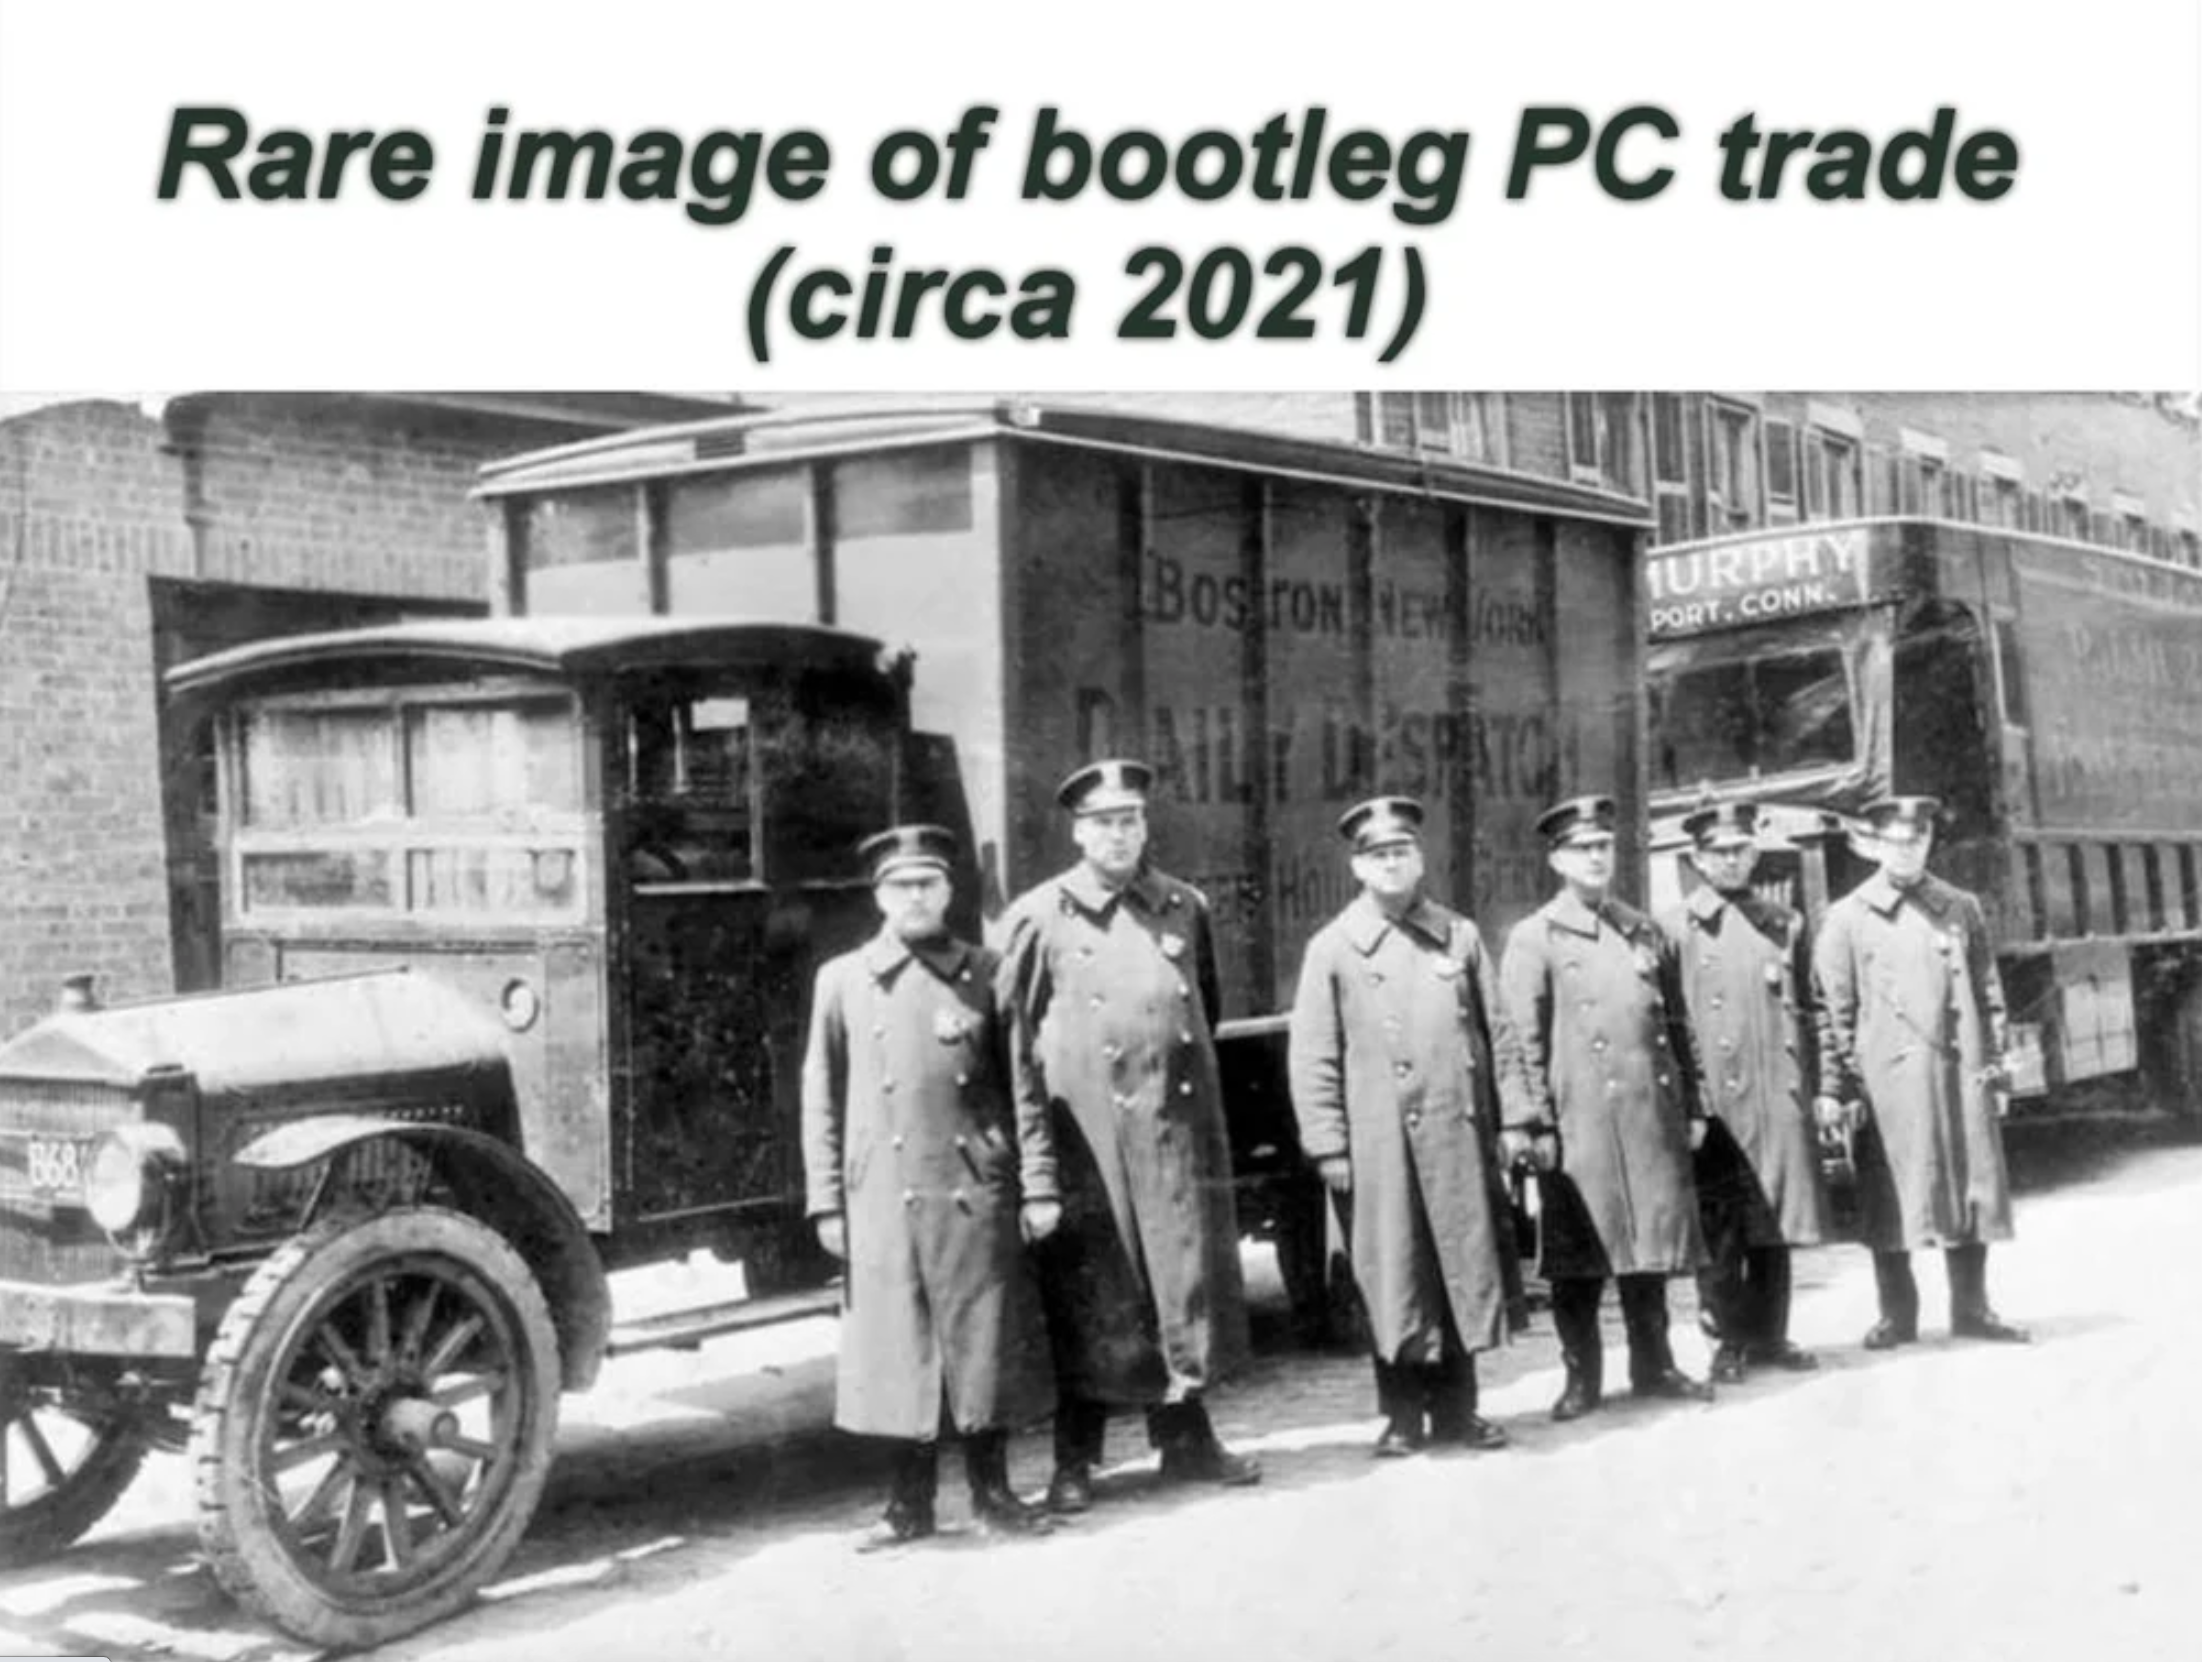 funny gaming memes -  Rare image of bootleg Pc trade circa 2021 Bos on lisad Furphy Port.Conne Cuma Al